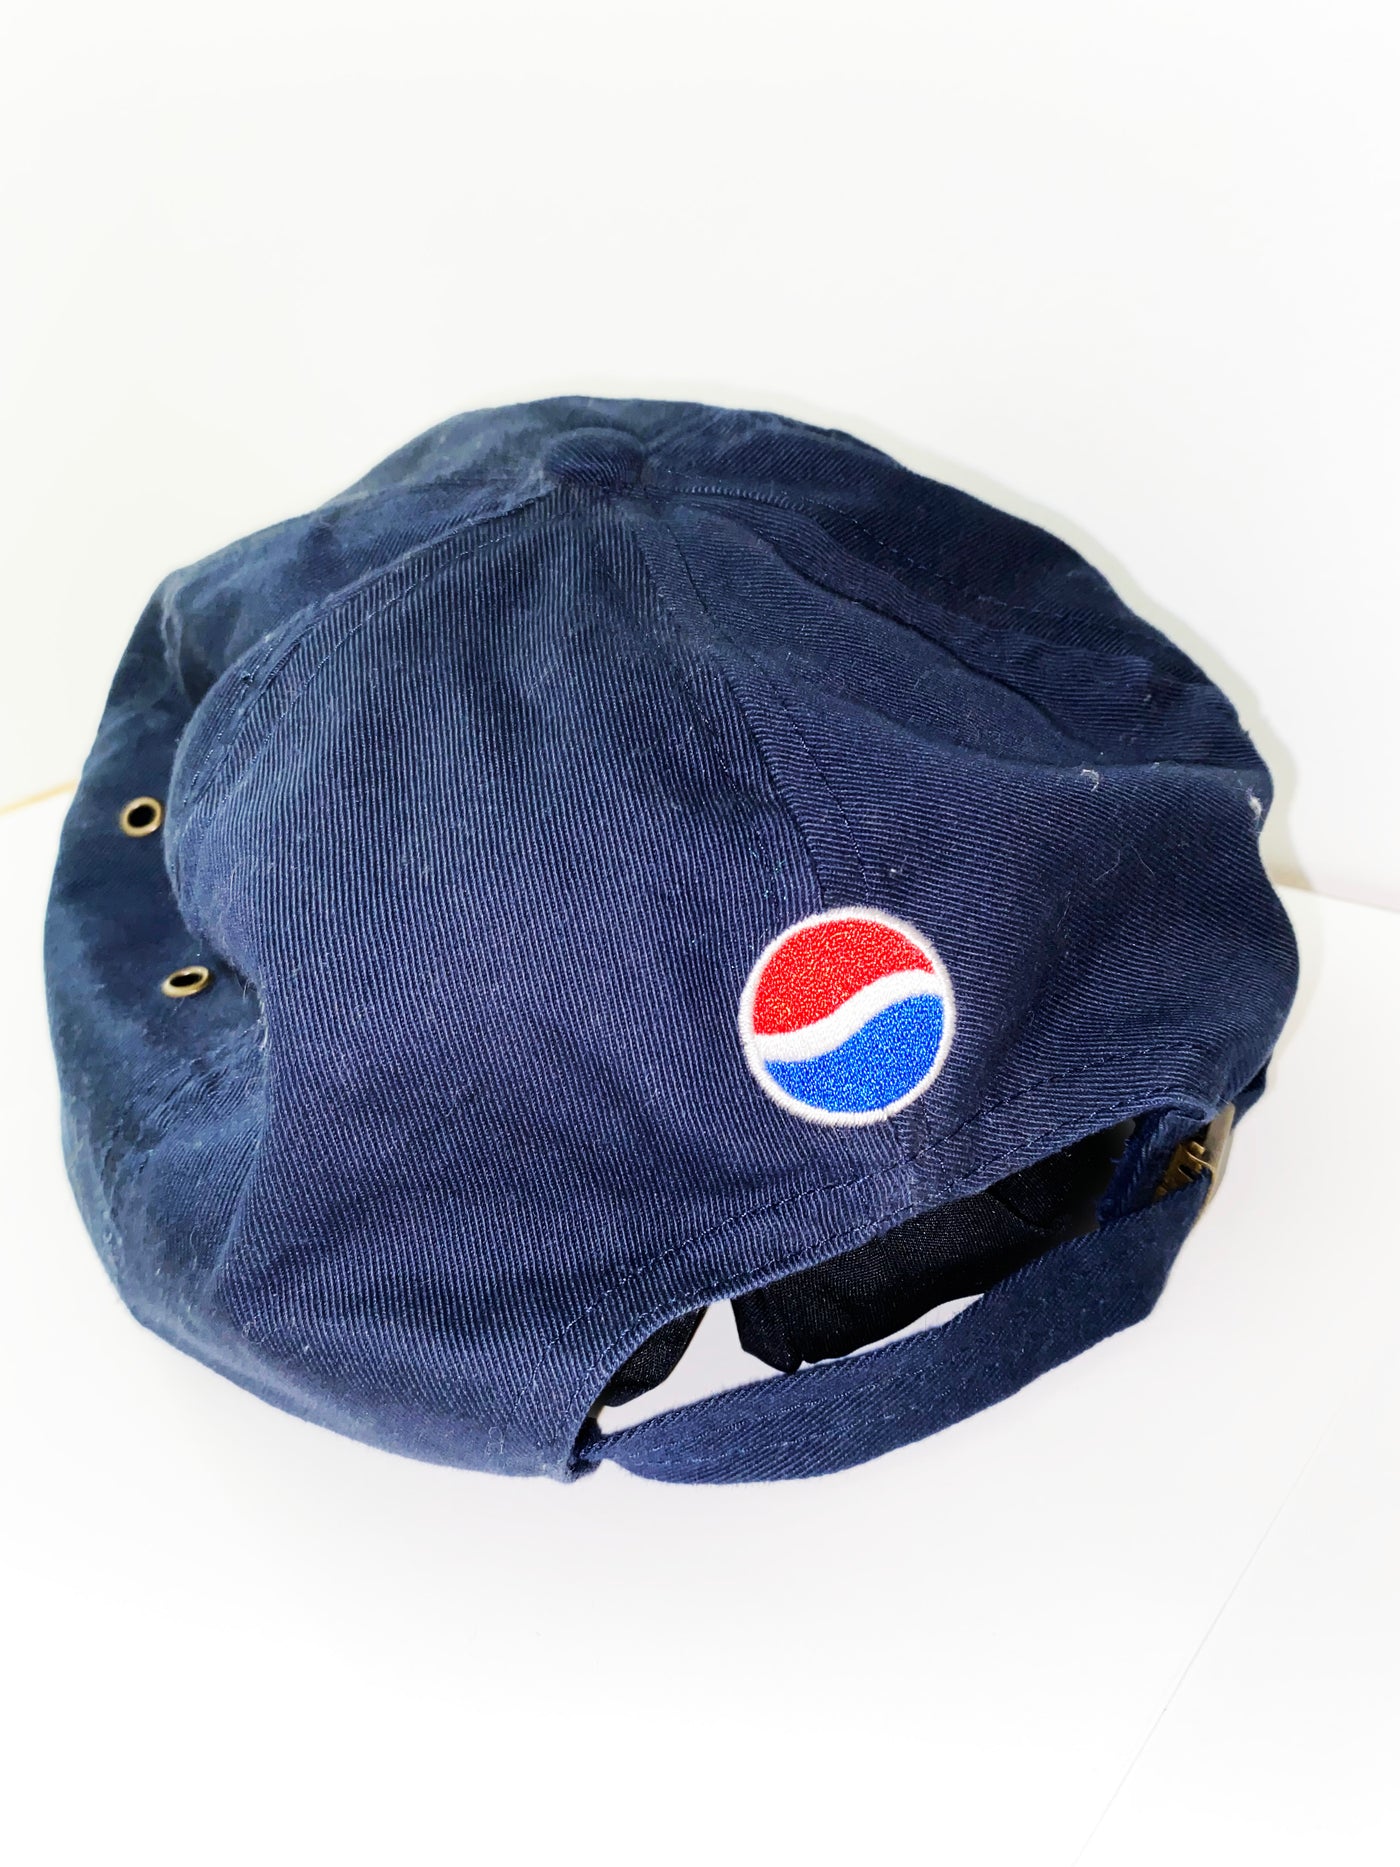 Vintage 1998 Pepsi StrapBack Hat